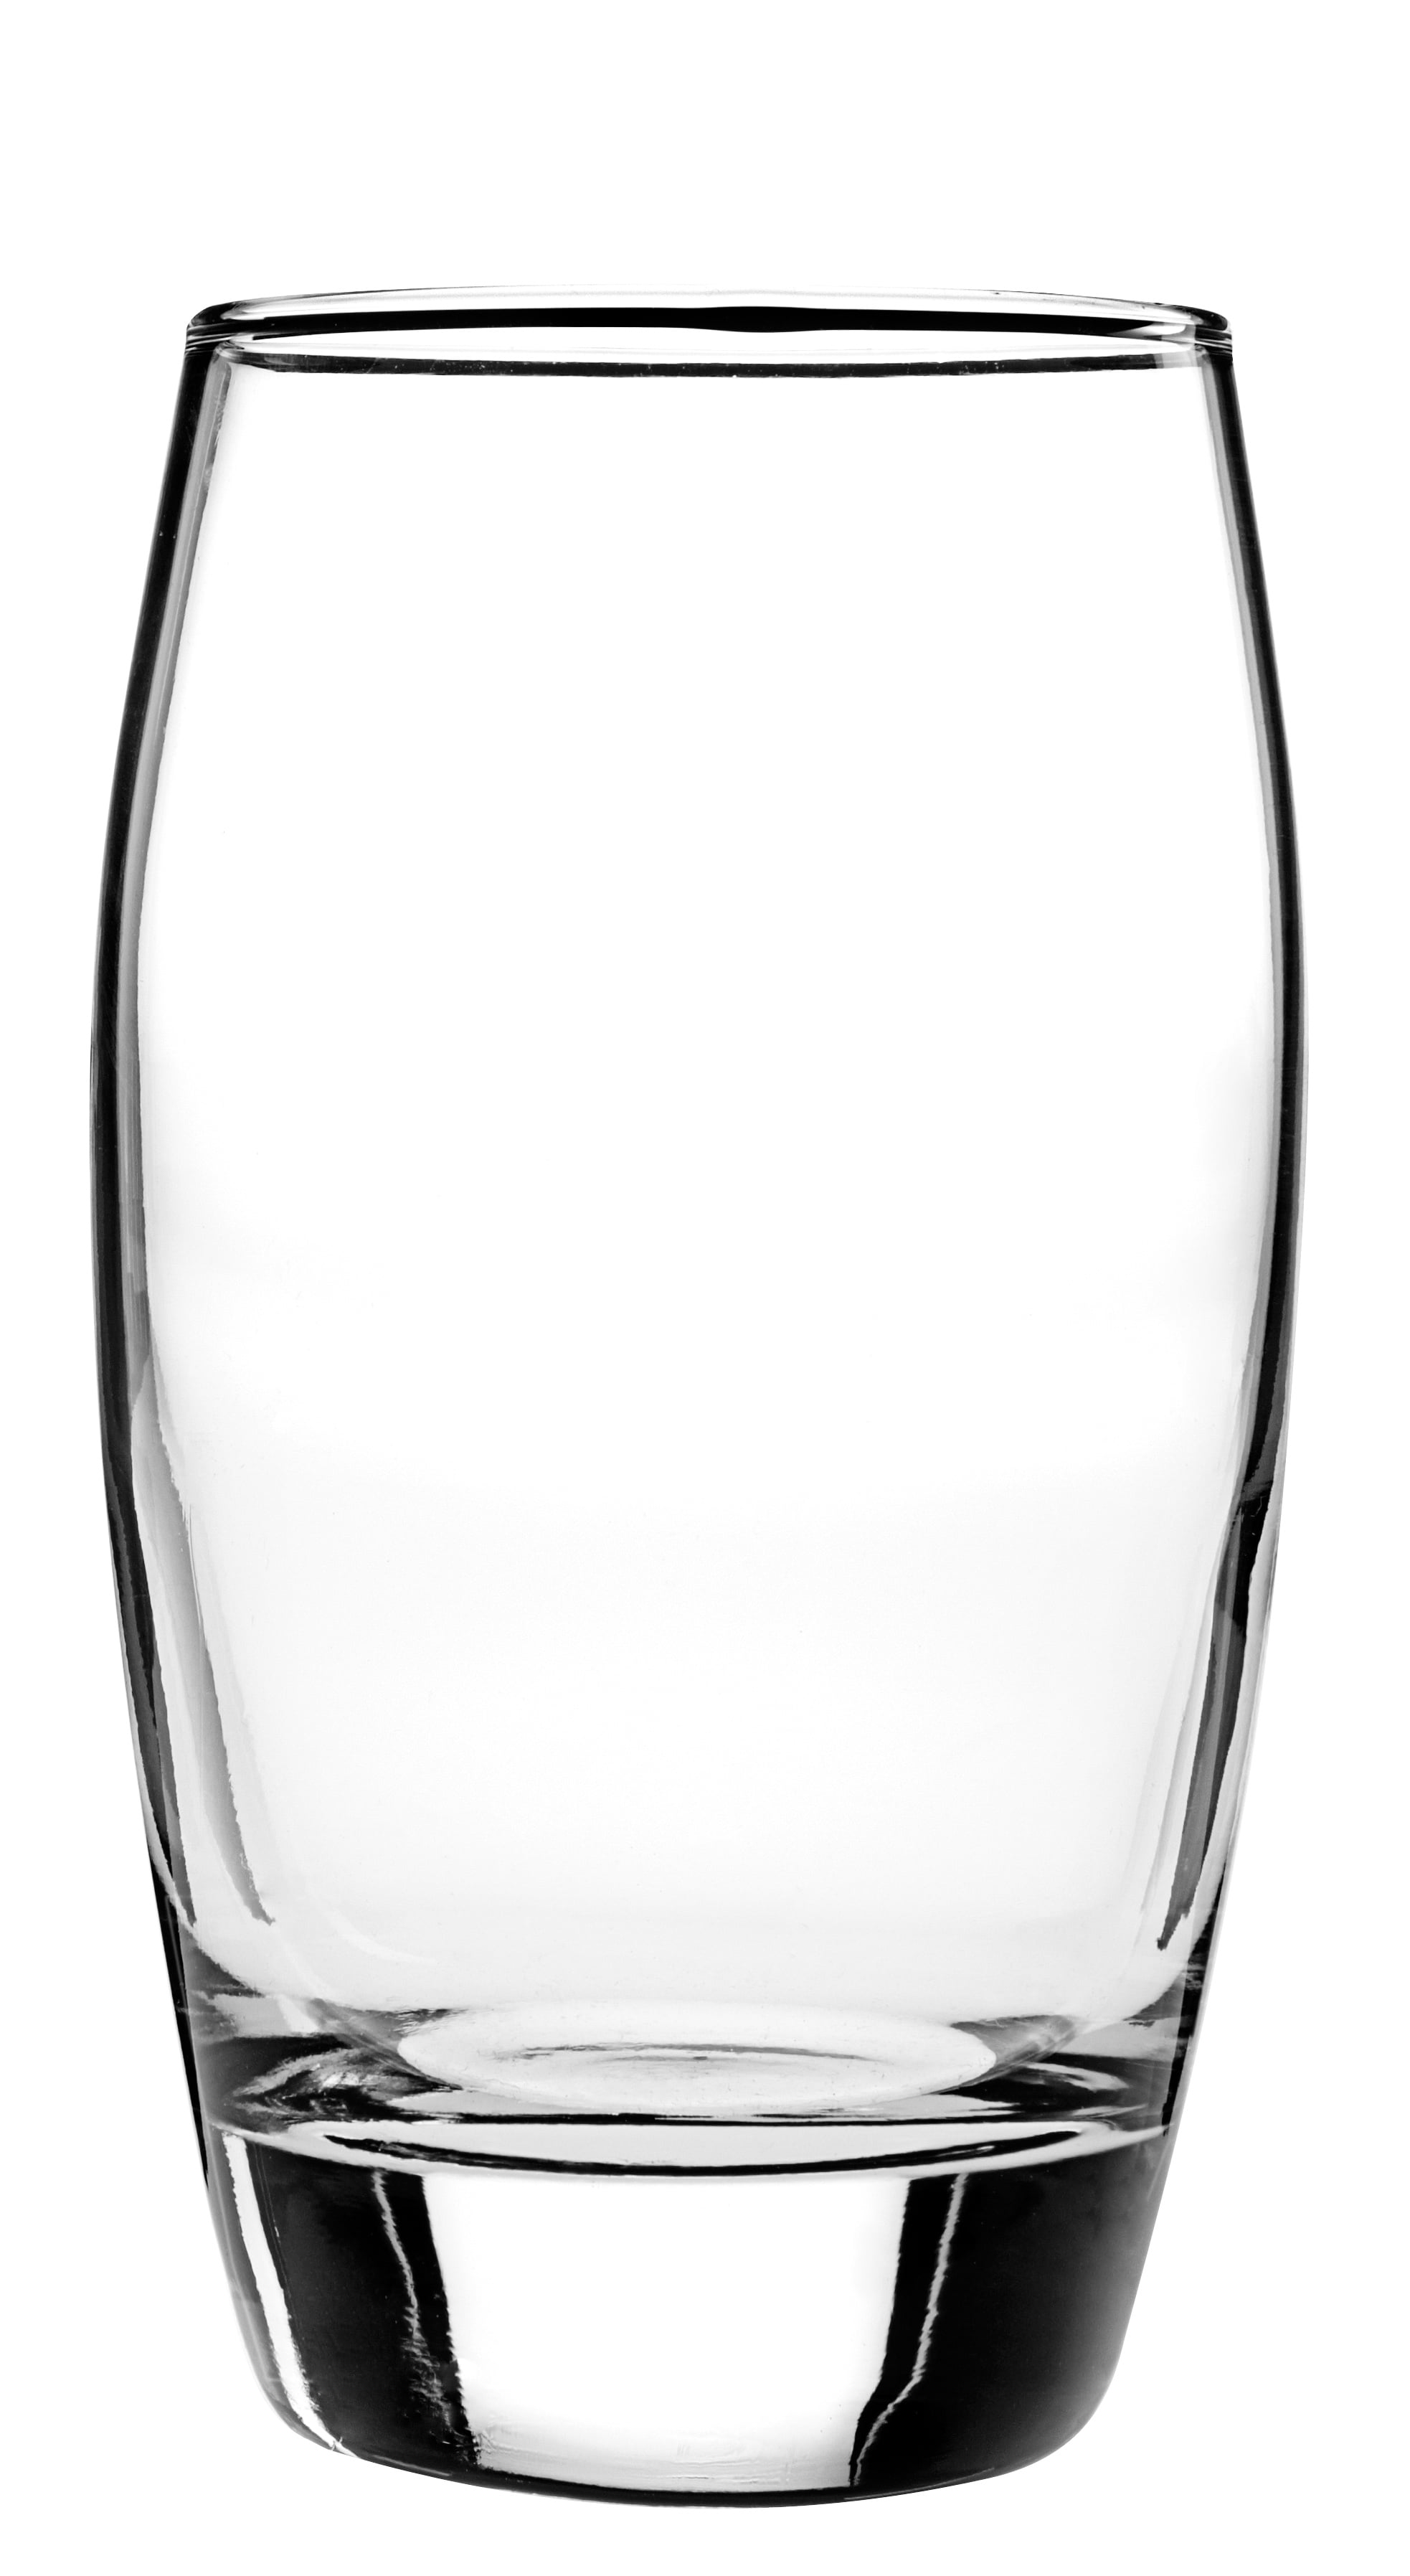 4.2-Inch Art Collection Big Glassware for Man Women Boys Girls Glass Gift Black